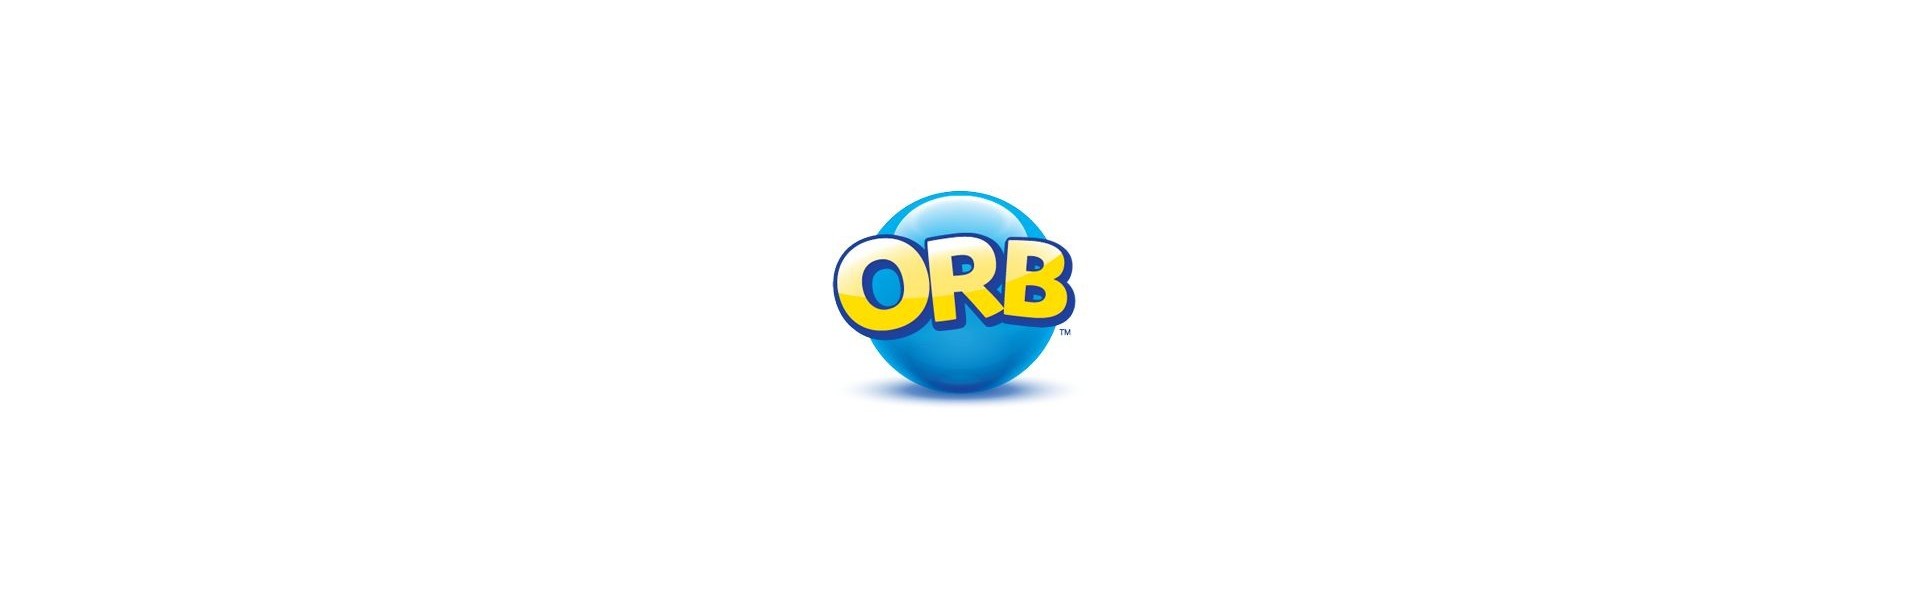 Orb Factory